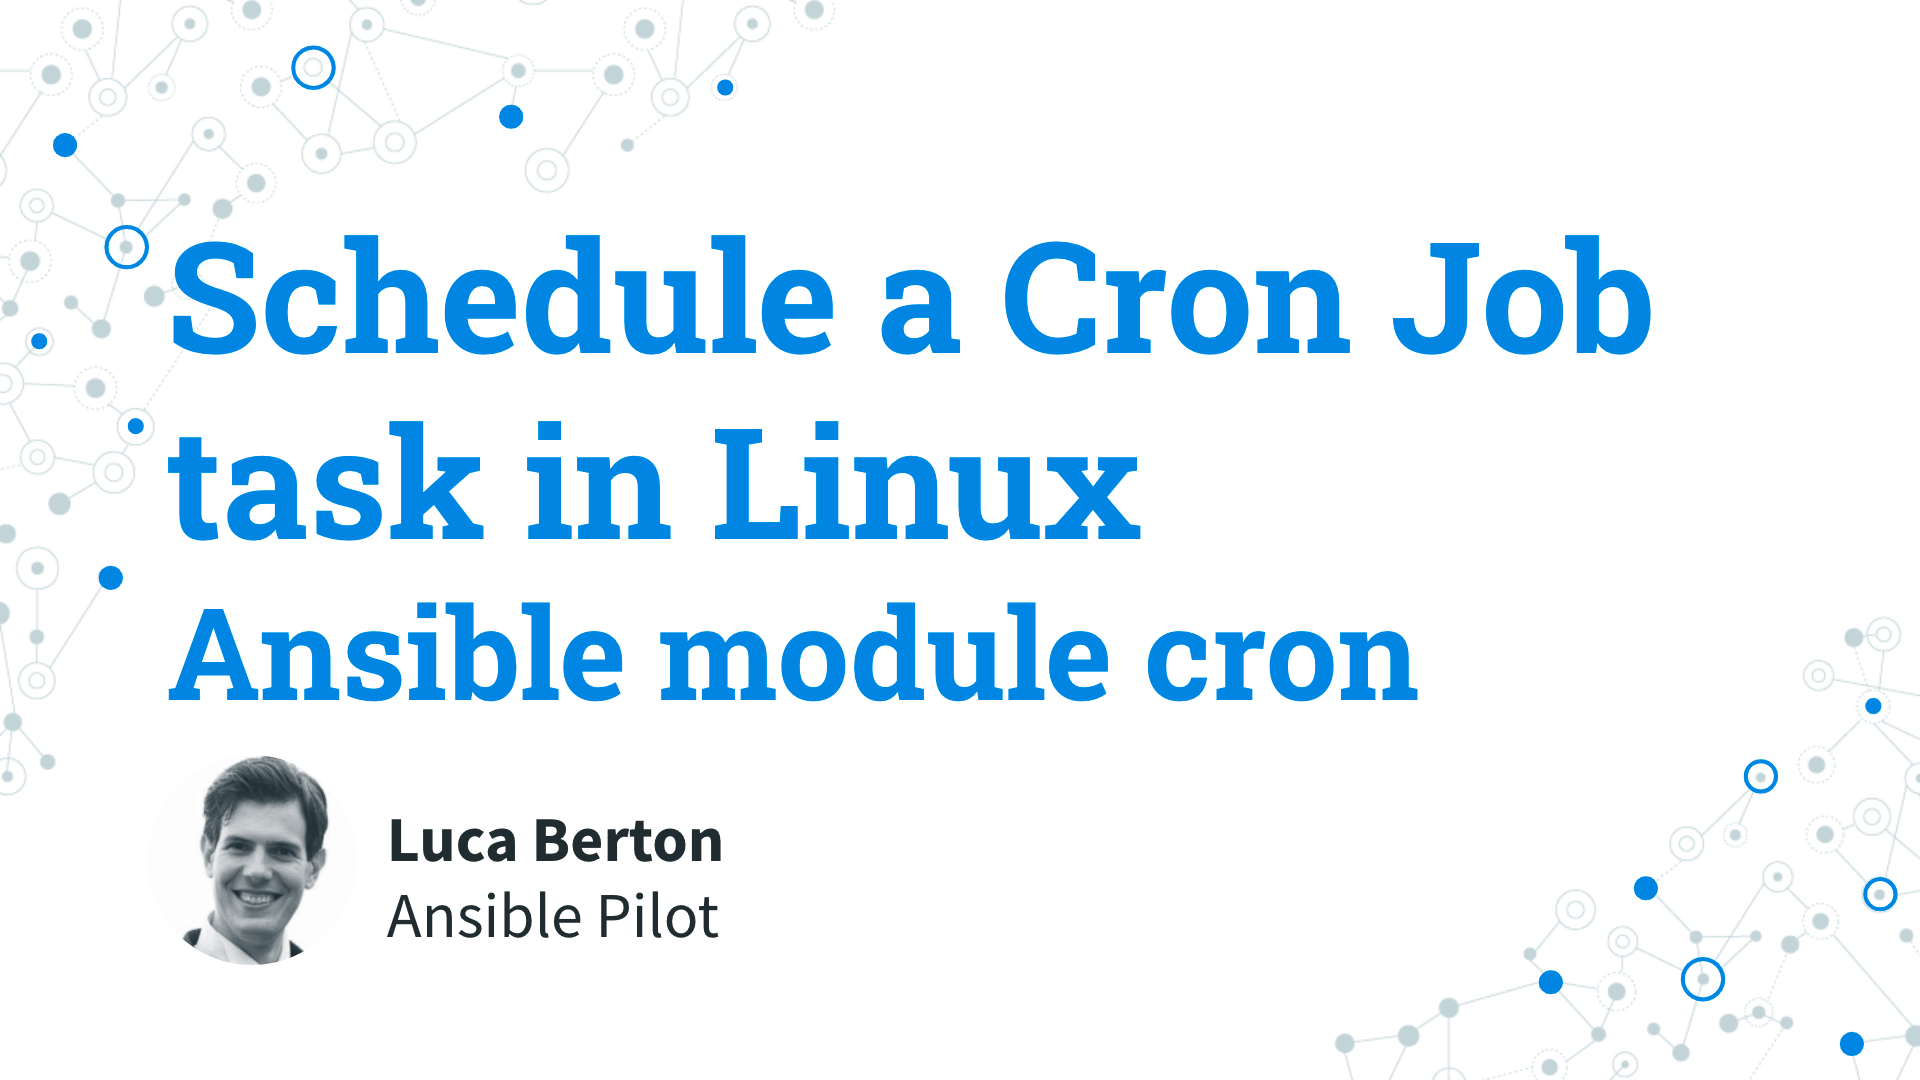 Schedule a Cron Job task in Linux - Ansible module cron